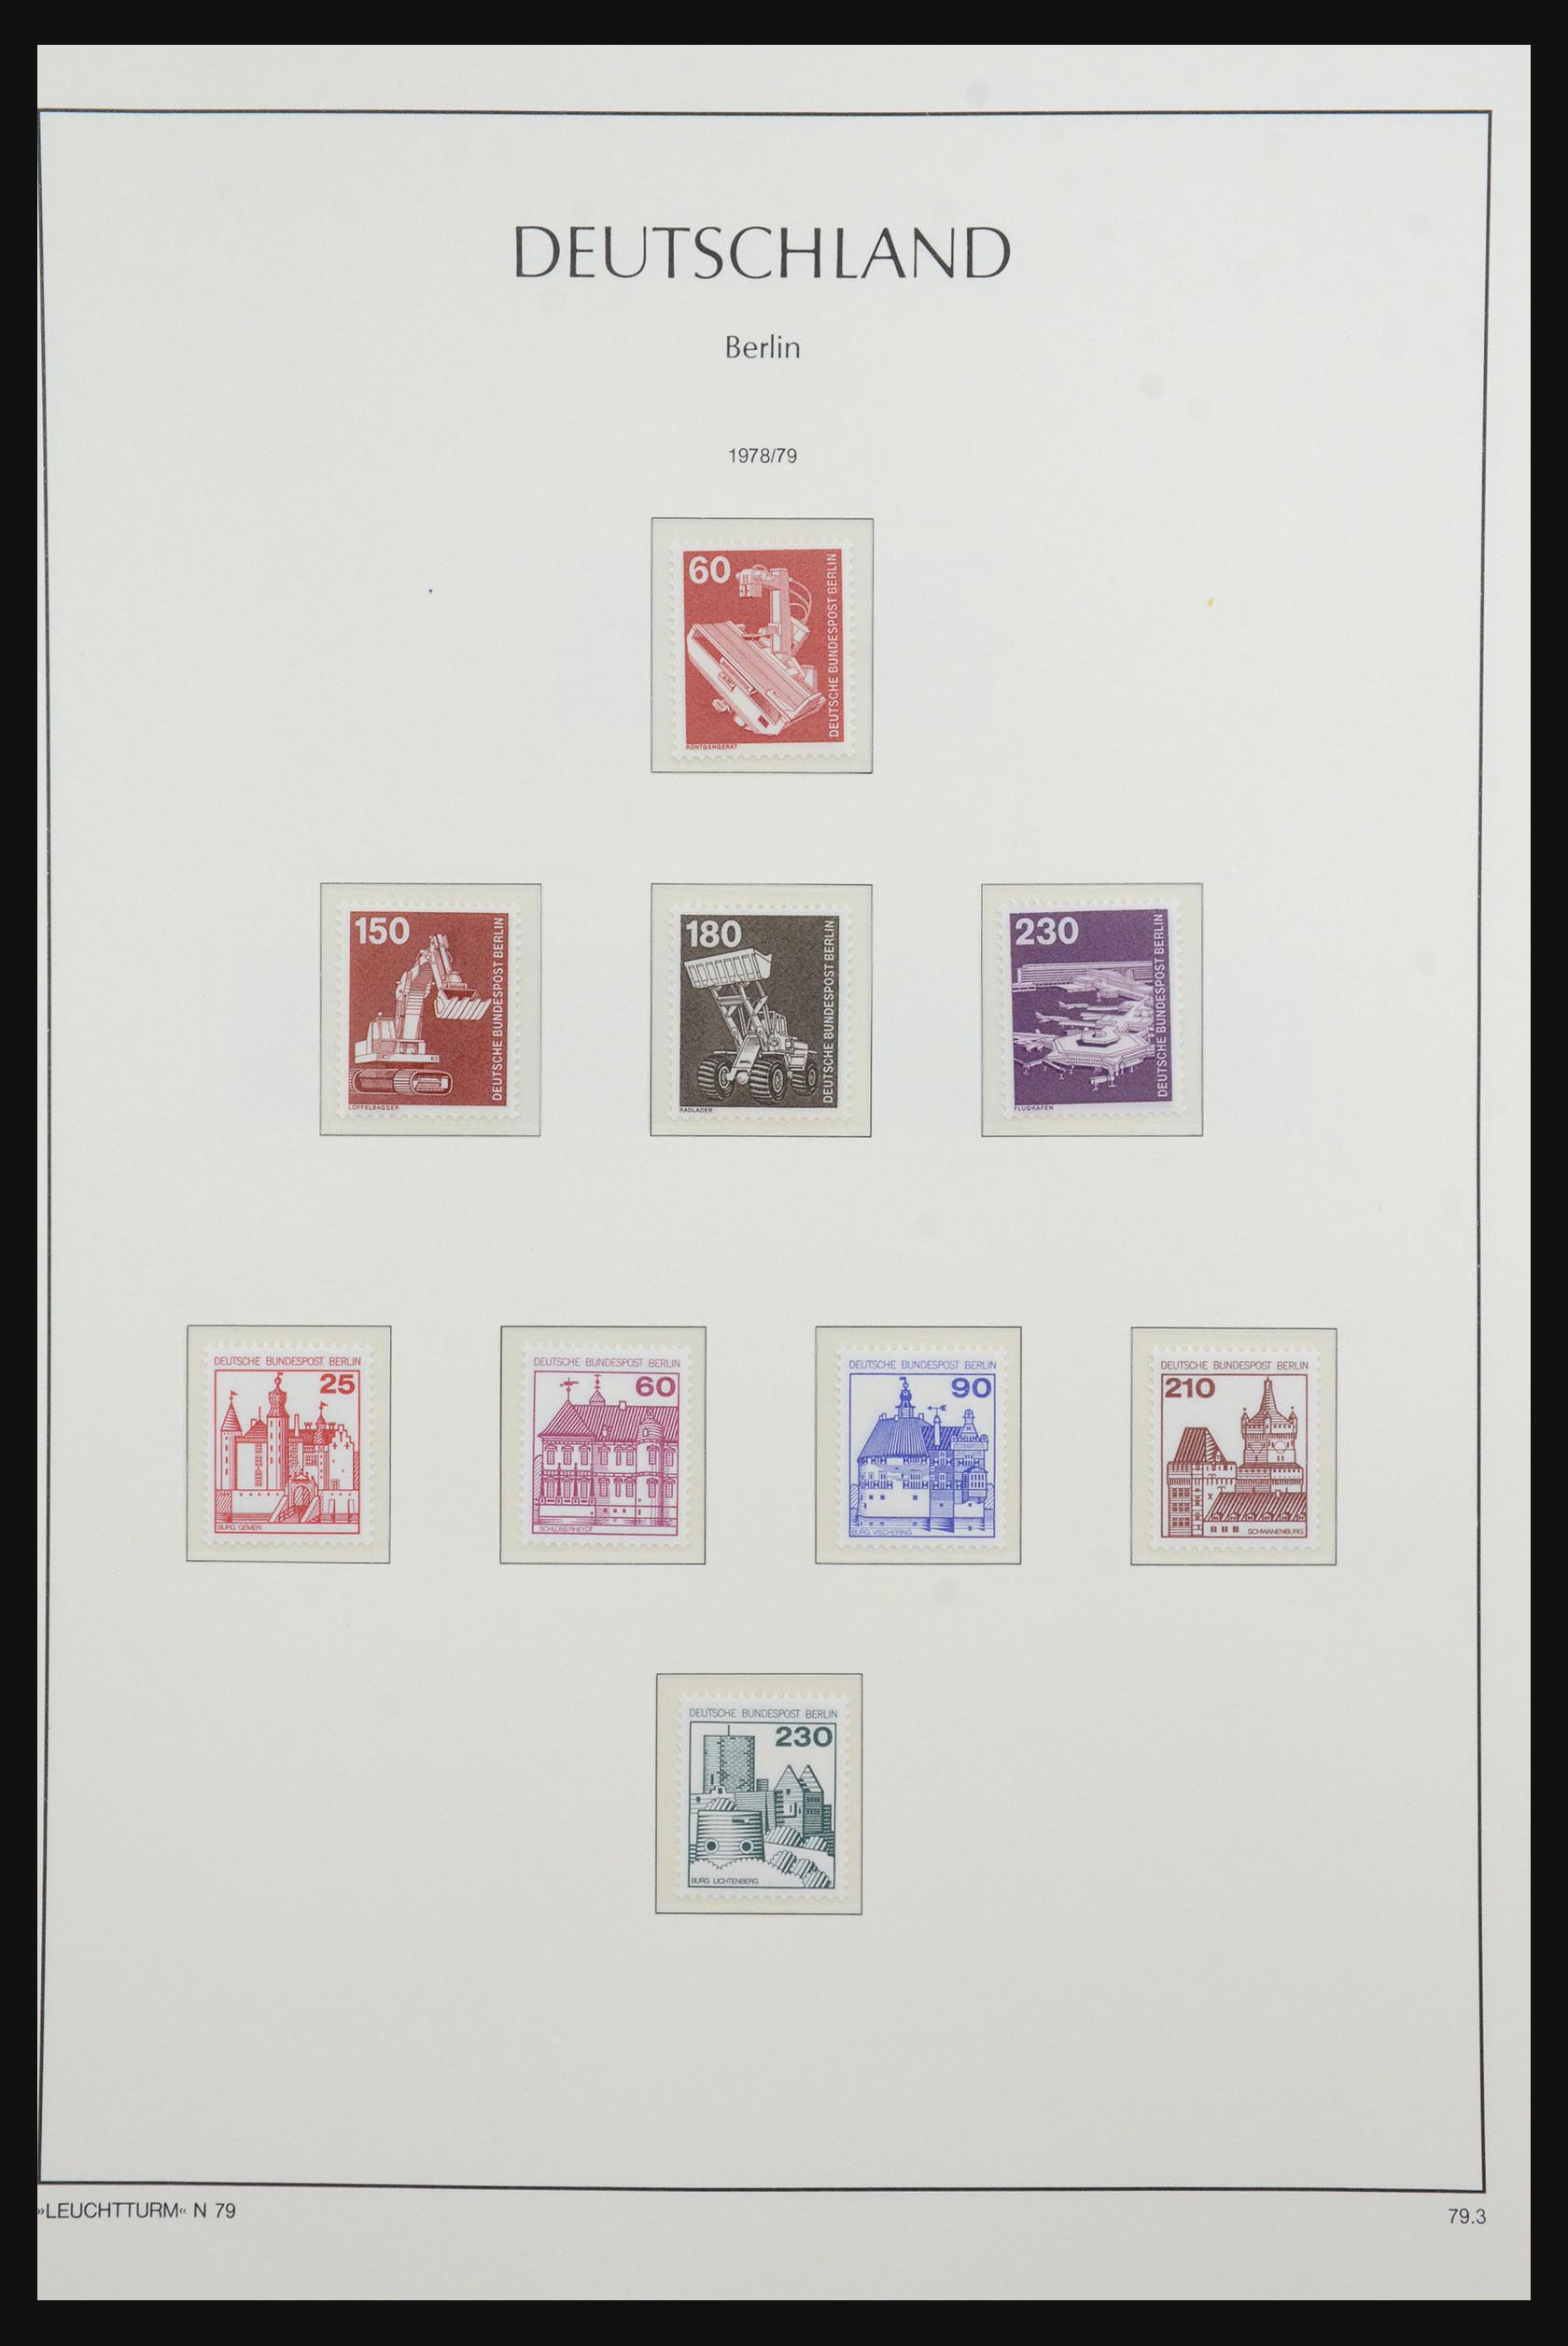 31601 059 - 31601 Bundespost, Berlin and Saar 1948-2008.